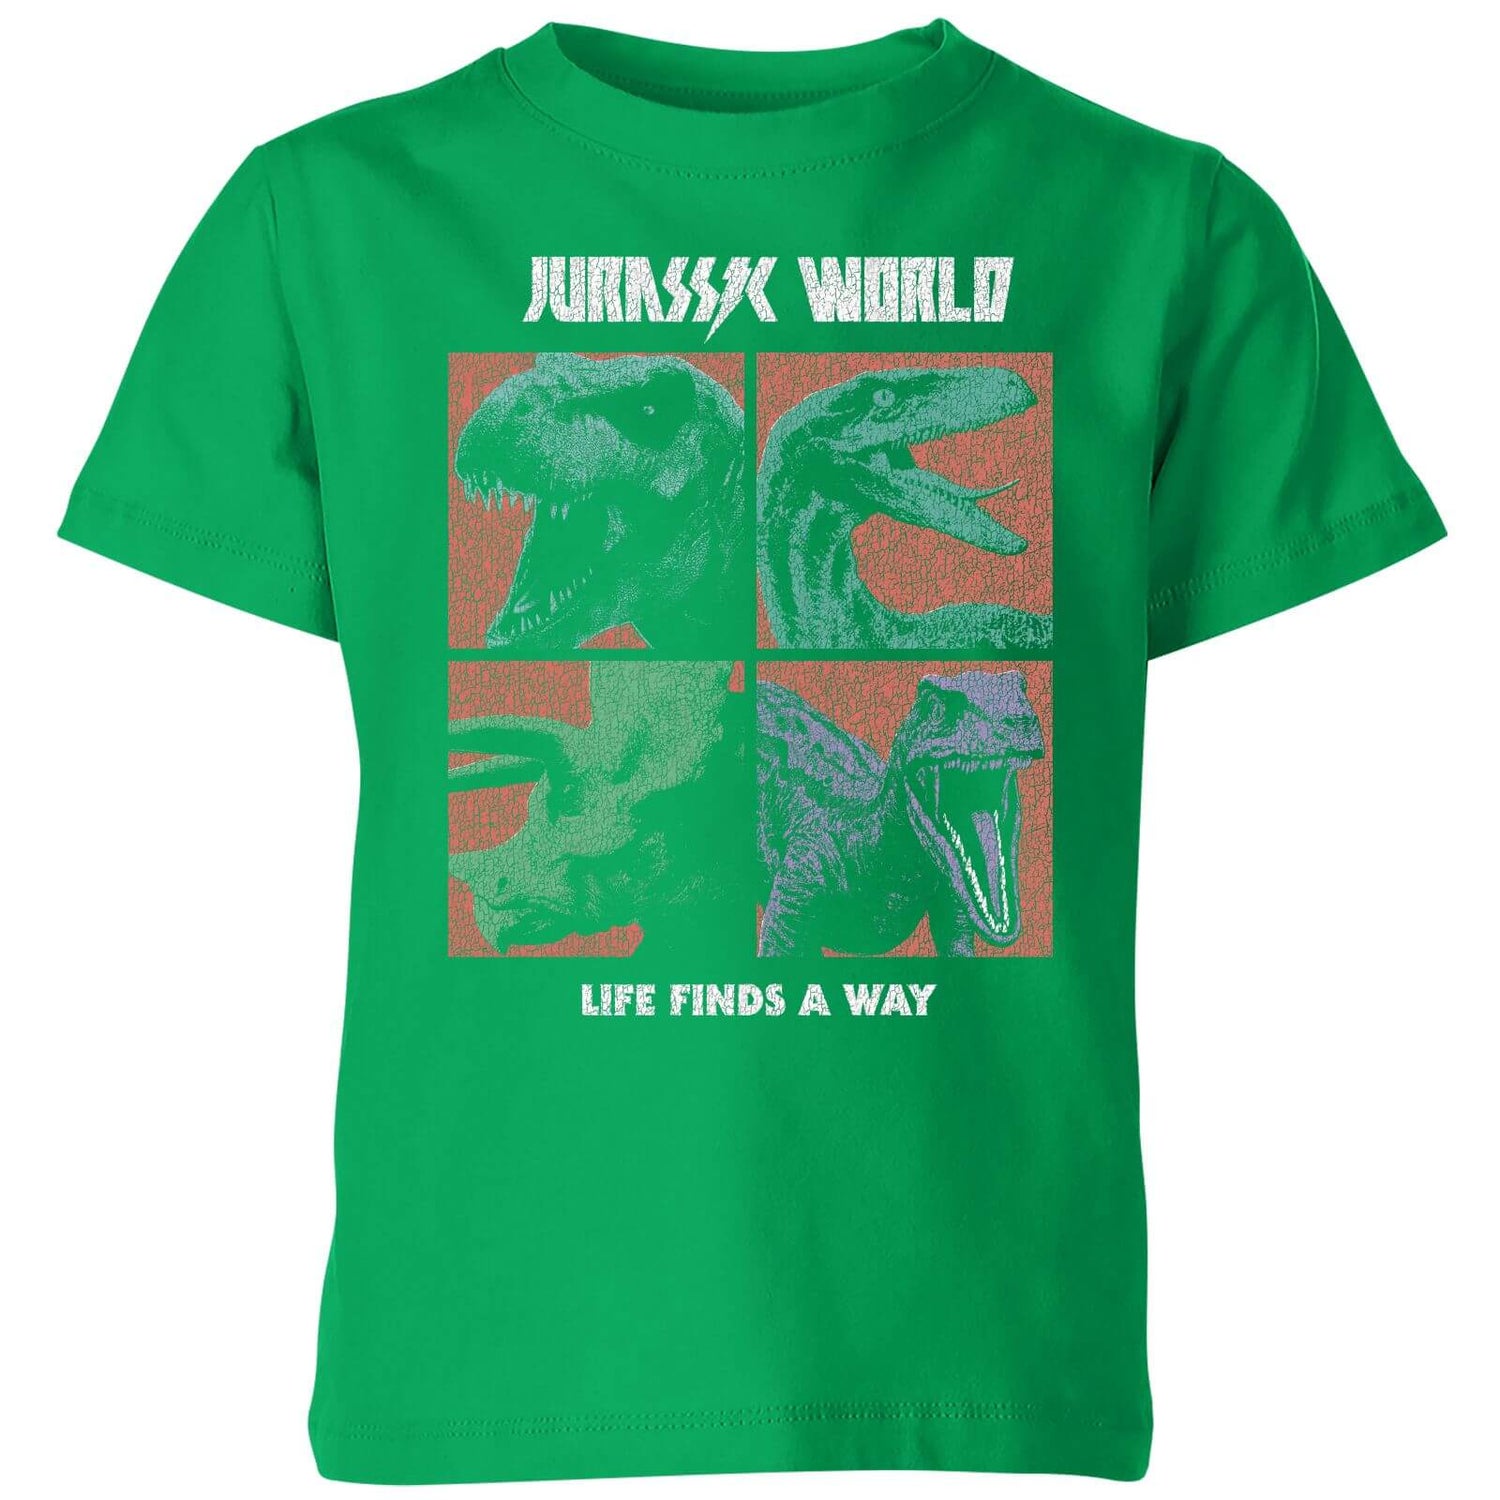 Jurassic Park World Four Colour Faces Kids' T-Shirt - Green